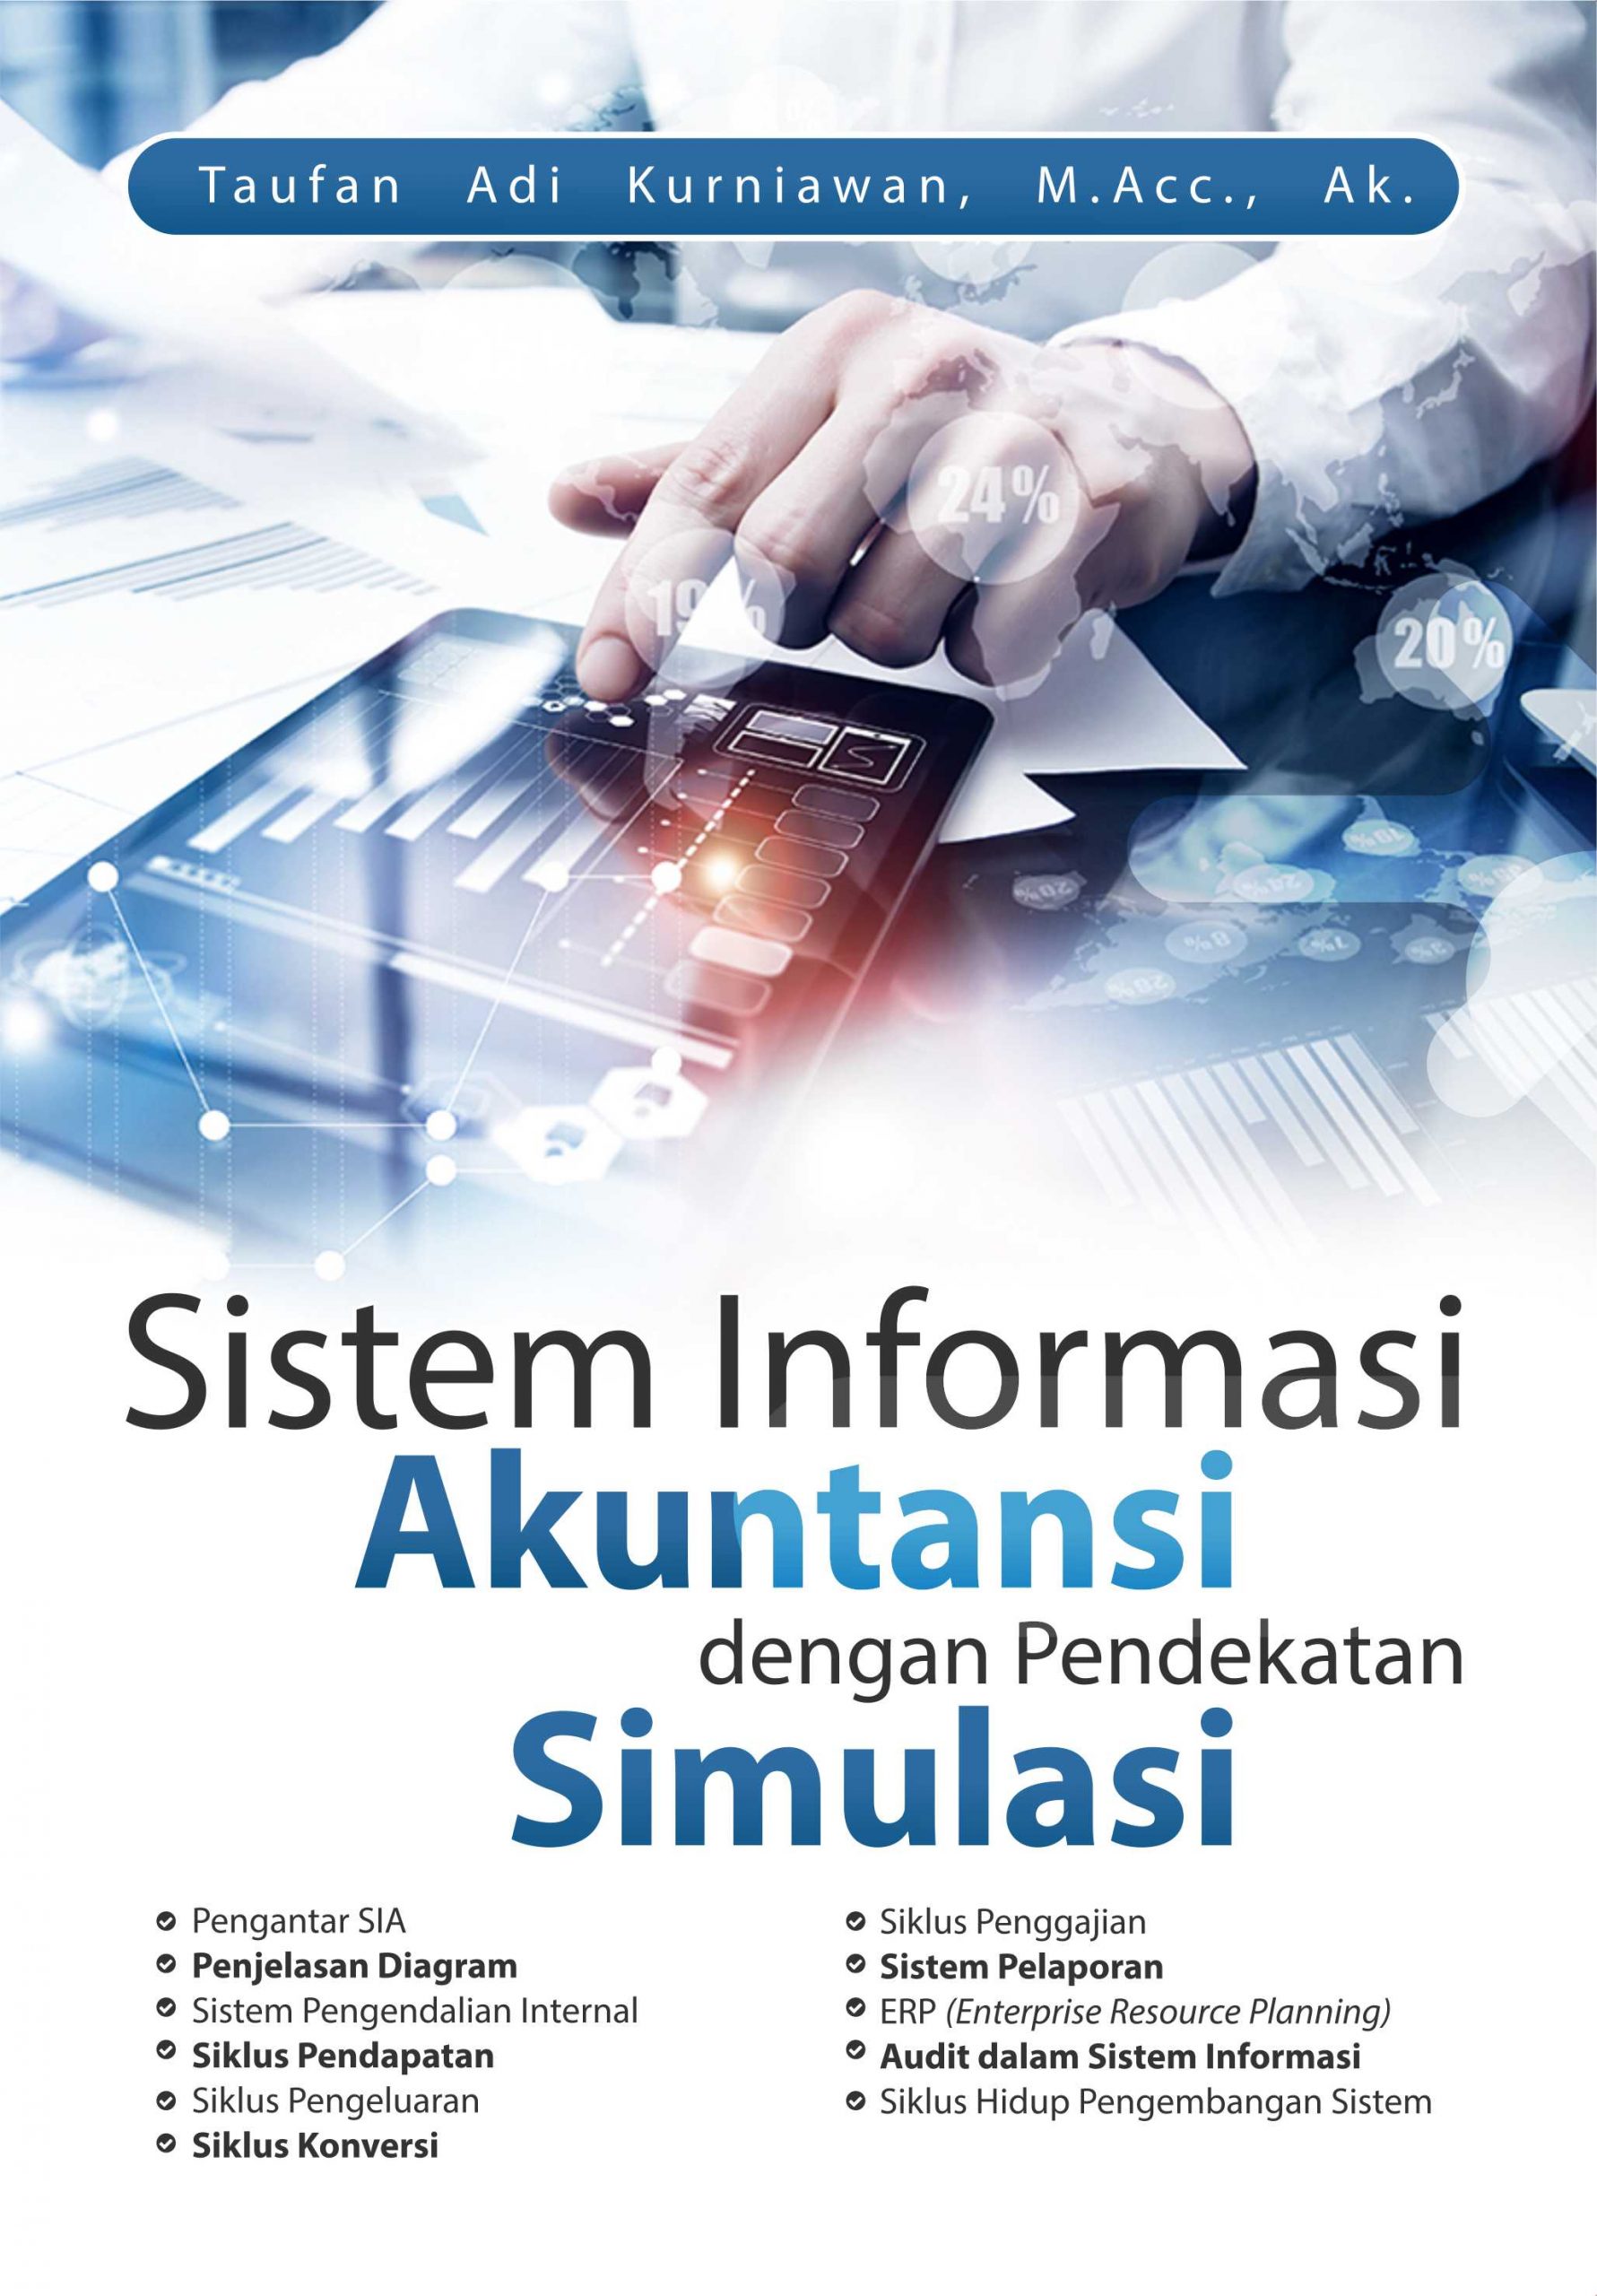 Sistem informasi akuntansi